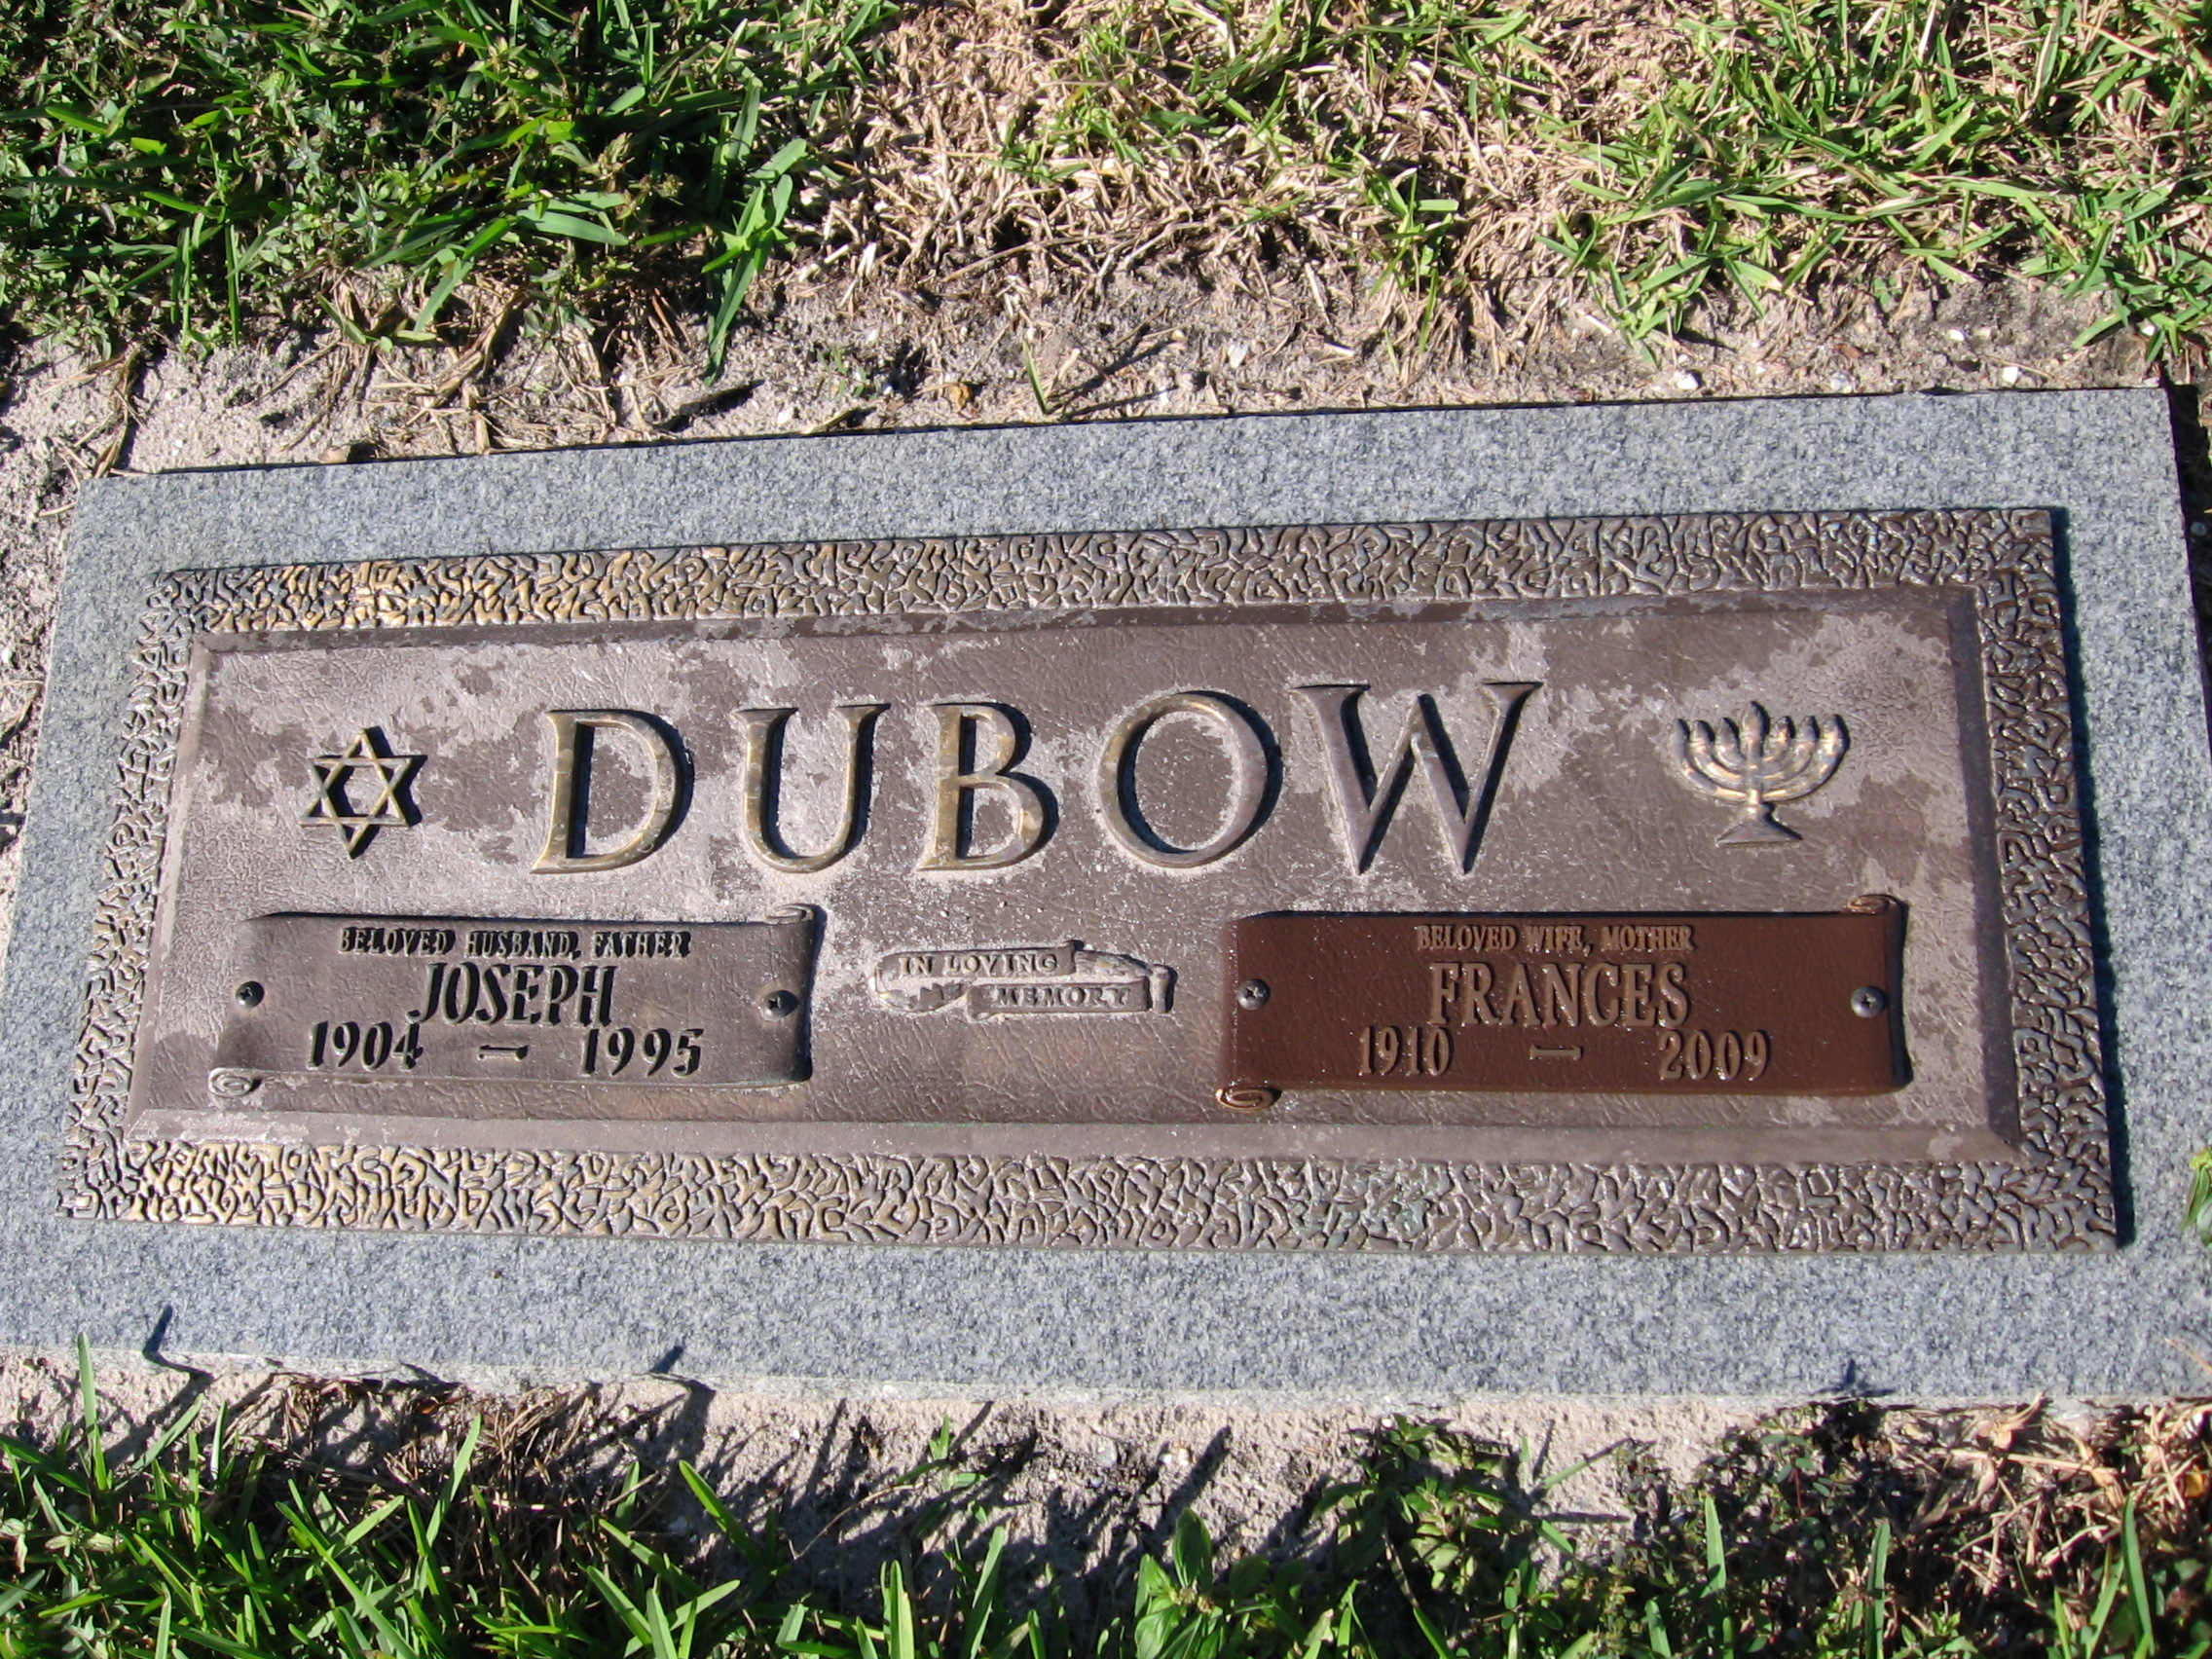 Joseph Dubow